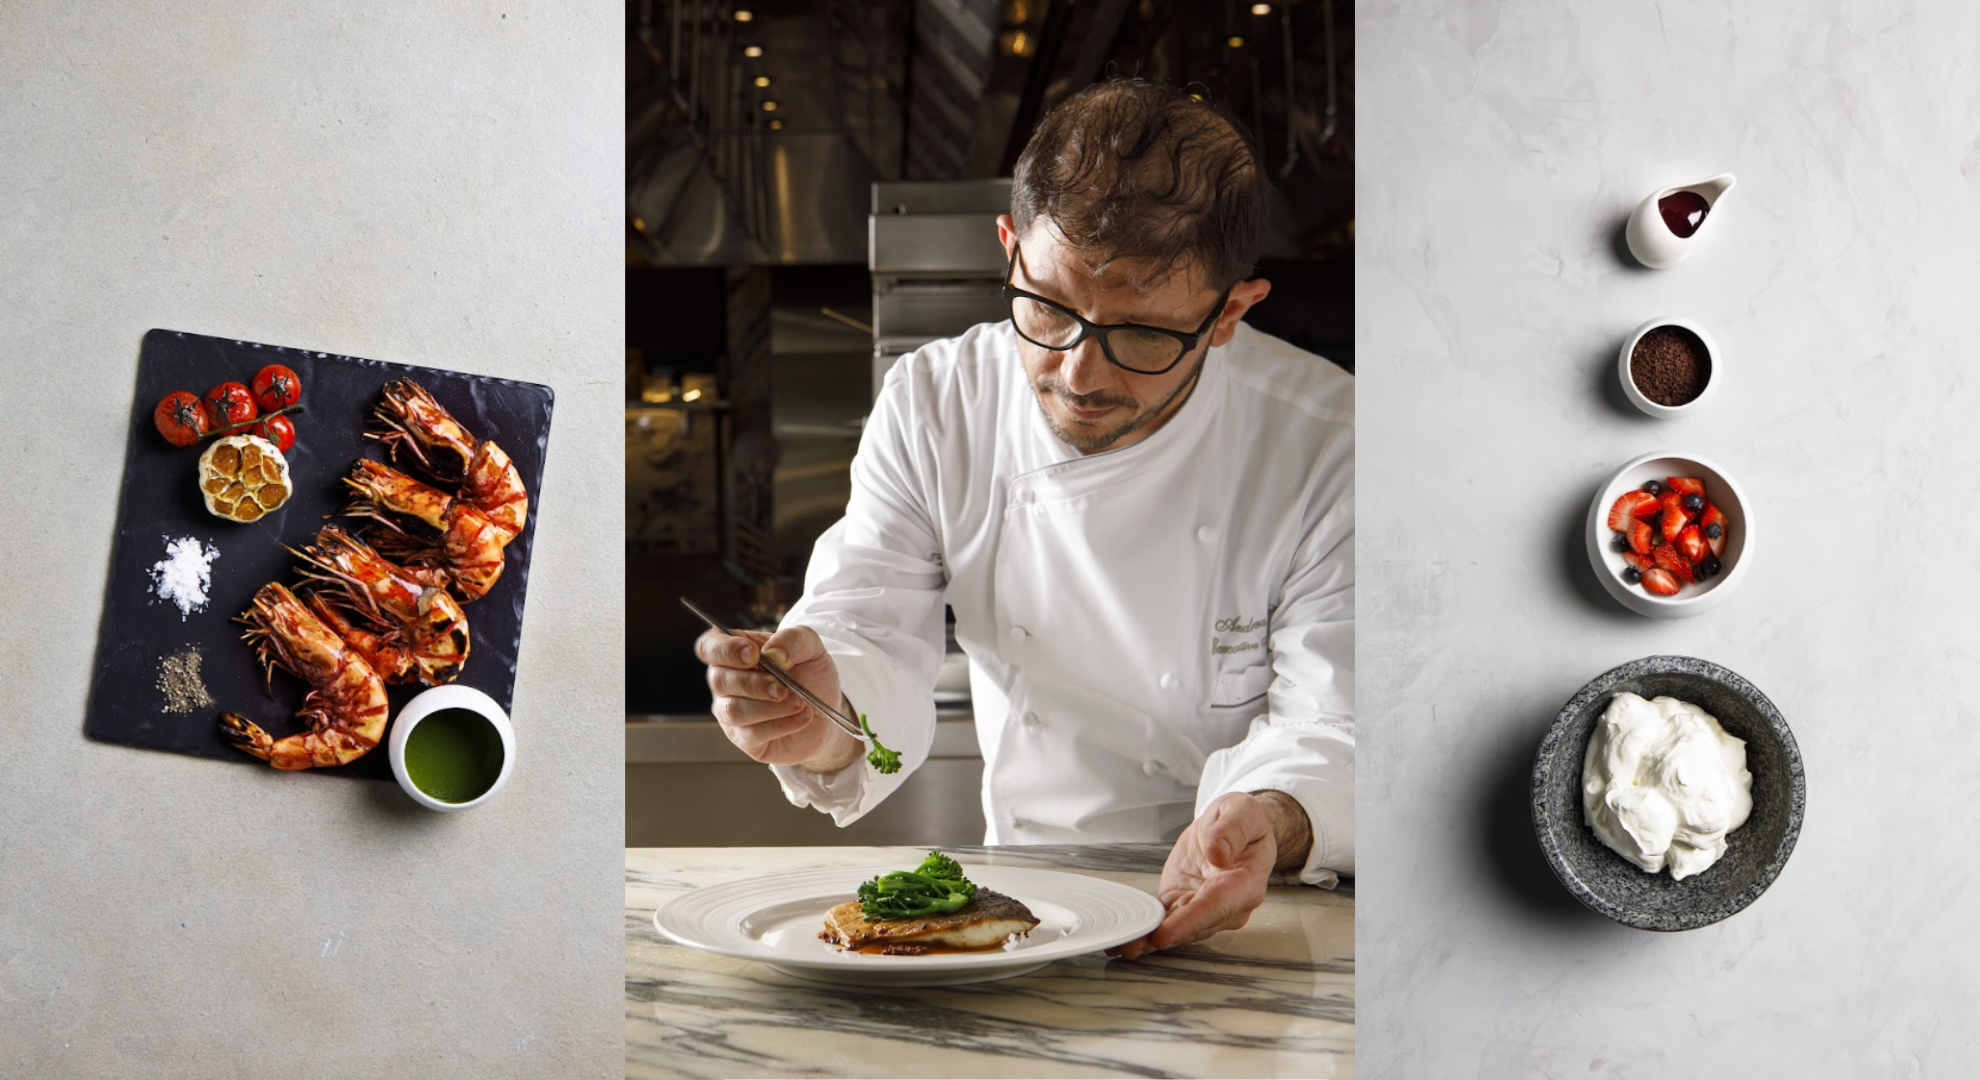 Italian star chef Andrea Spagoni’s next stop on his global culinary adventure: Manila